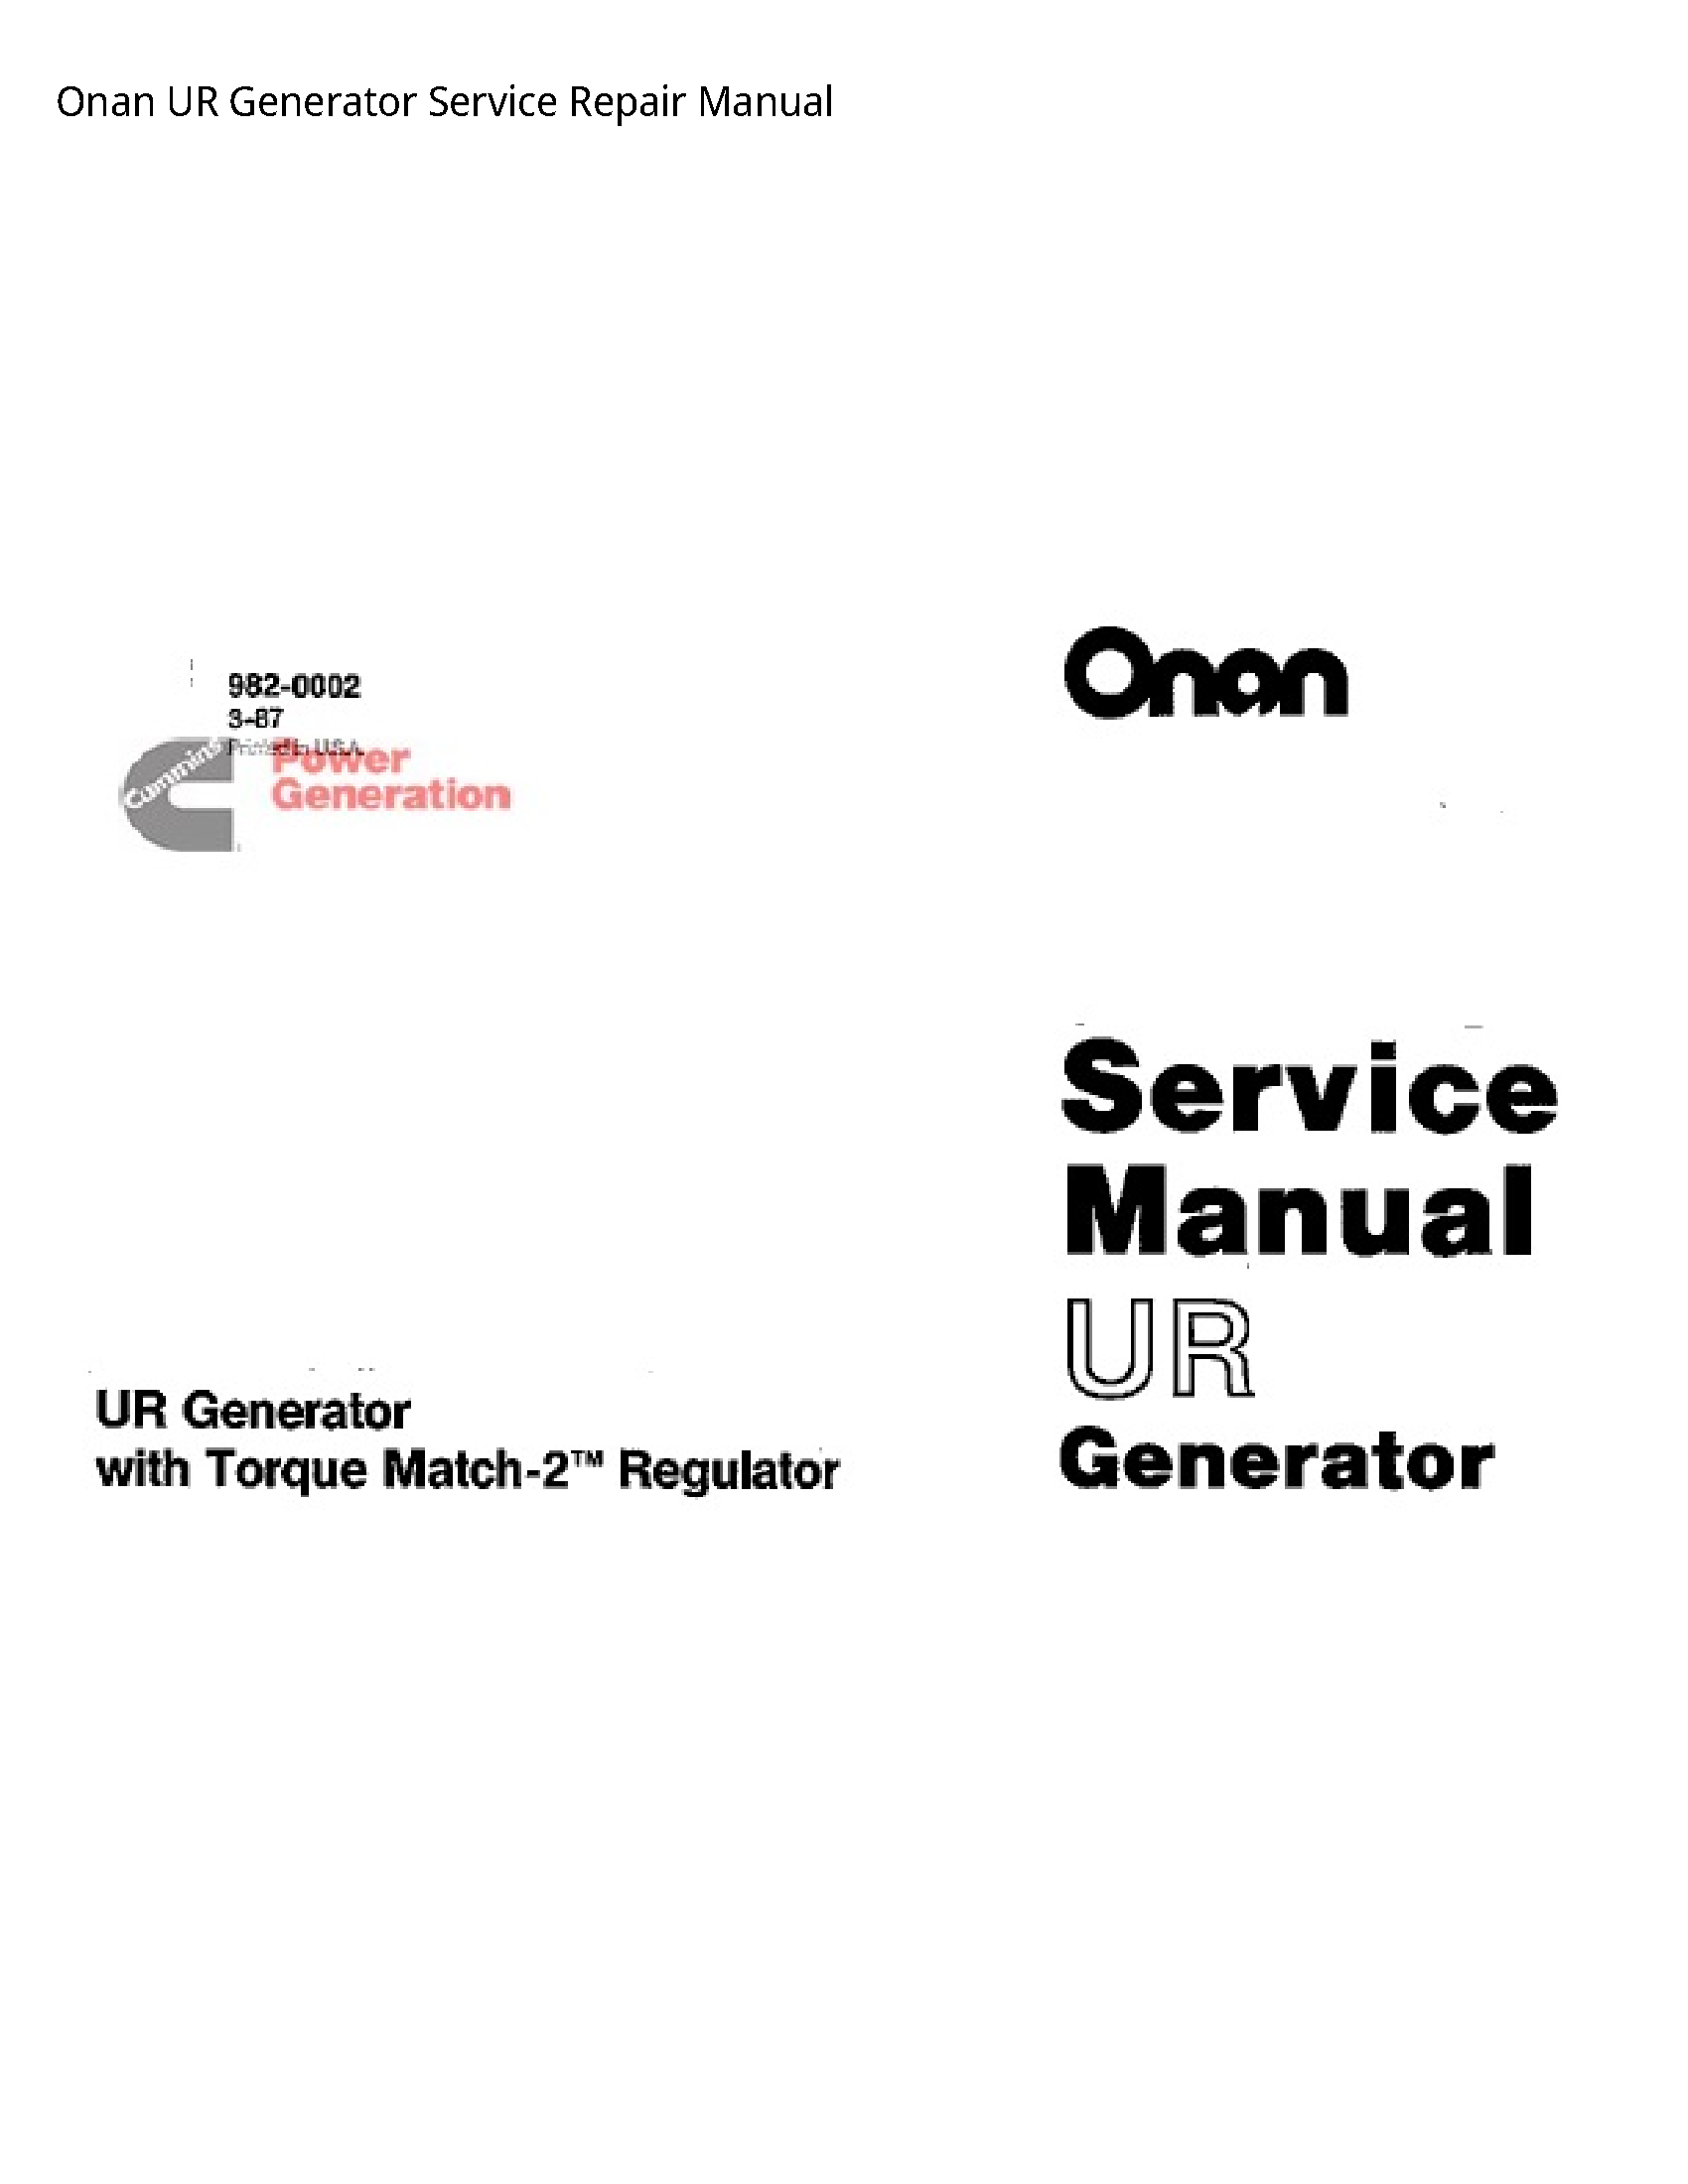 Onan UR Generator manual